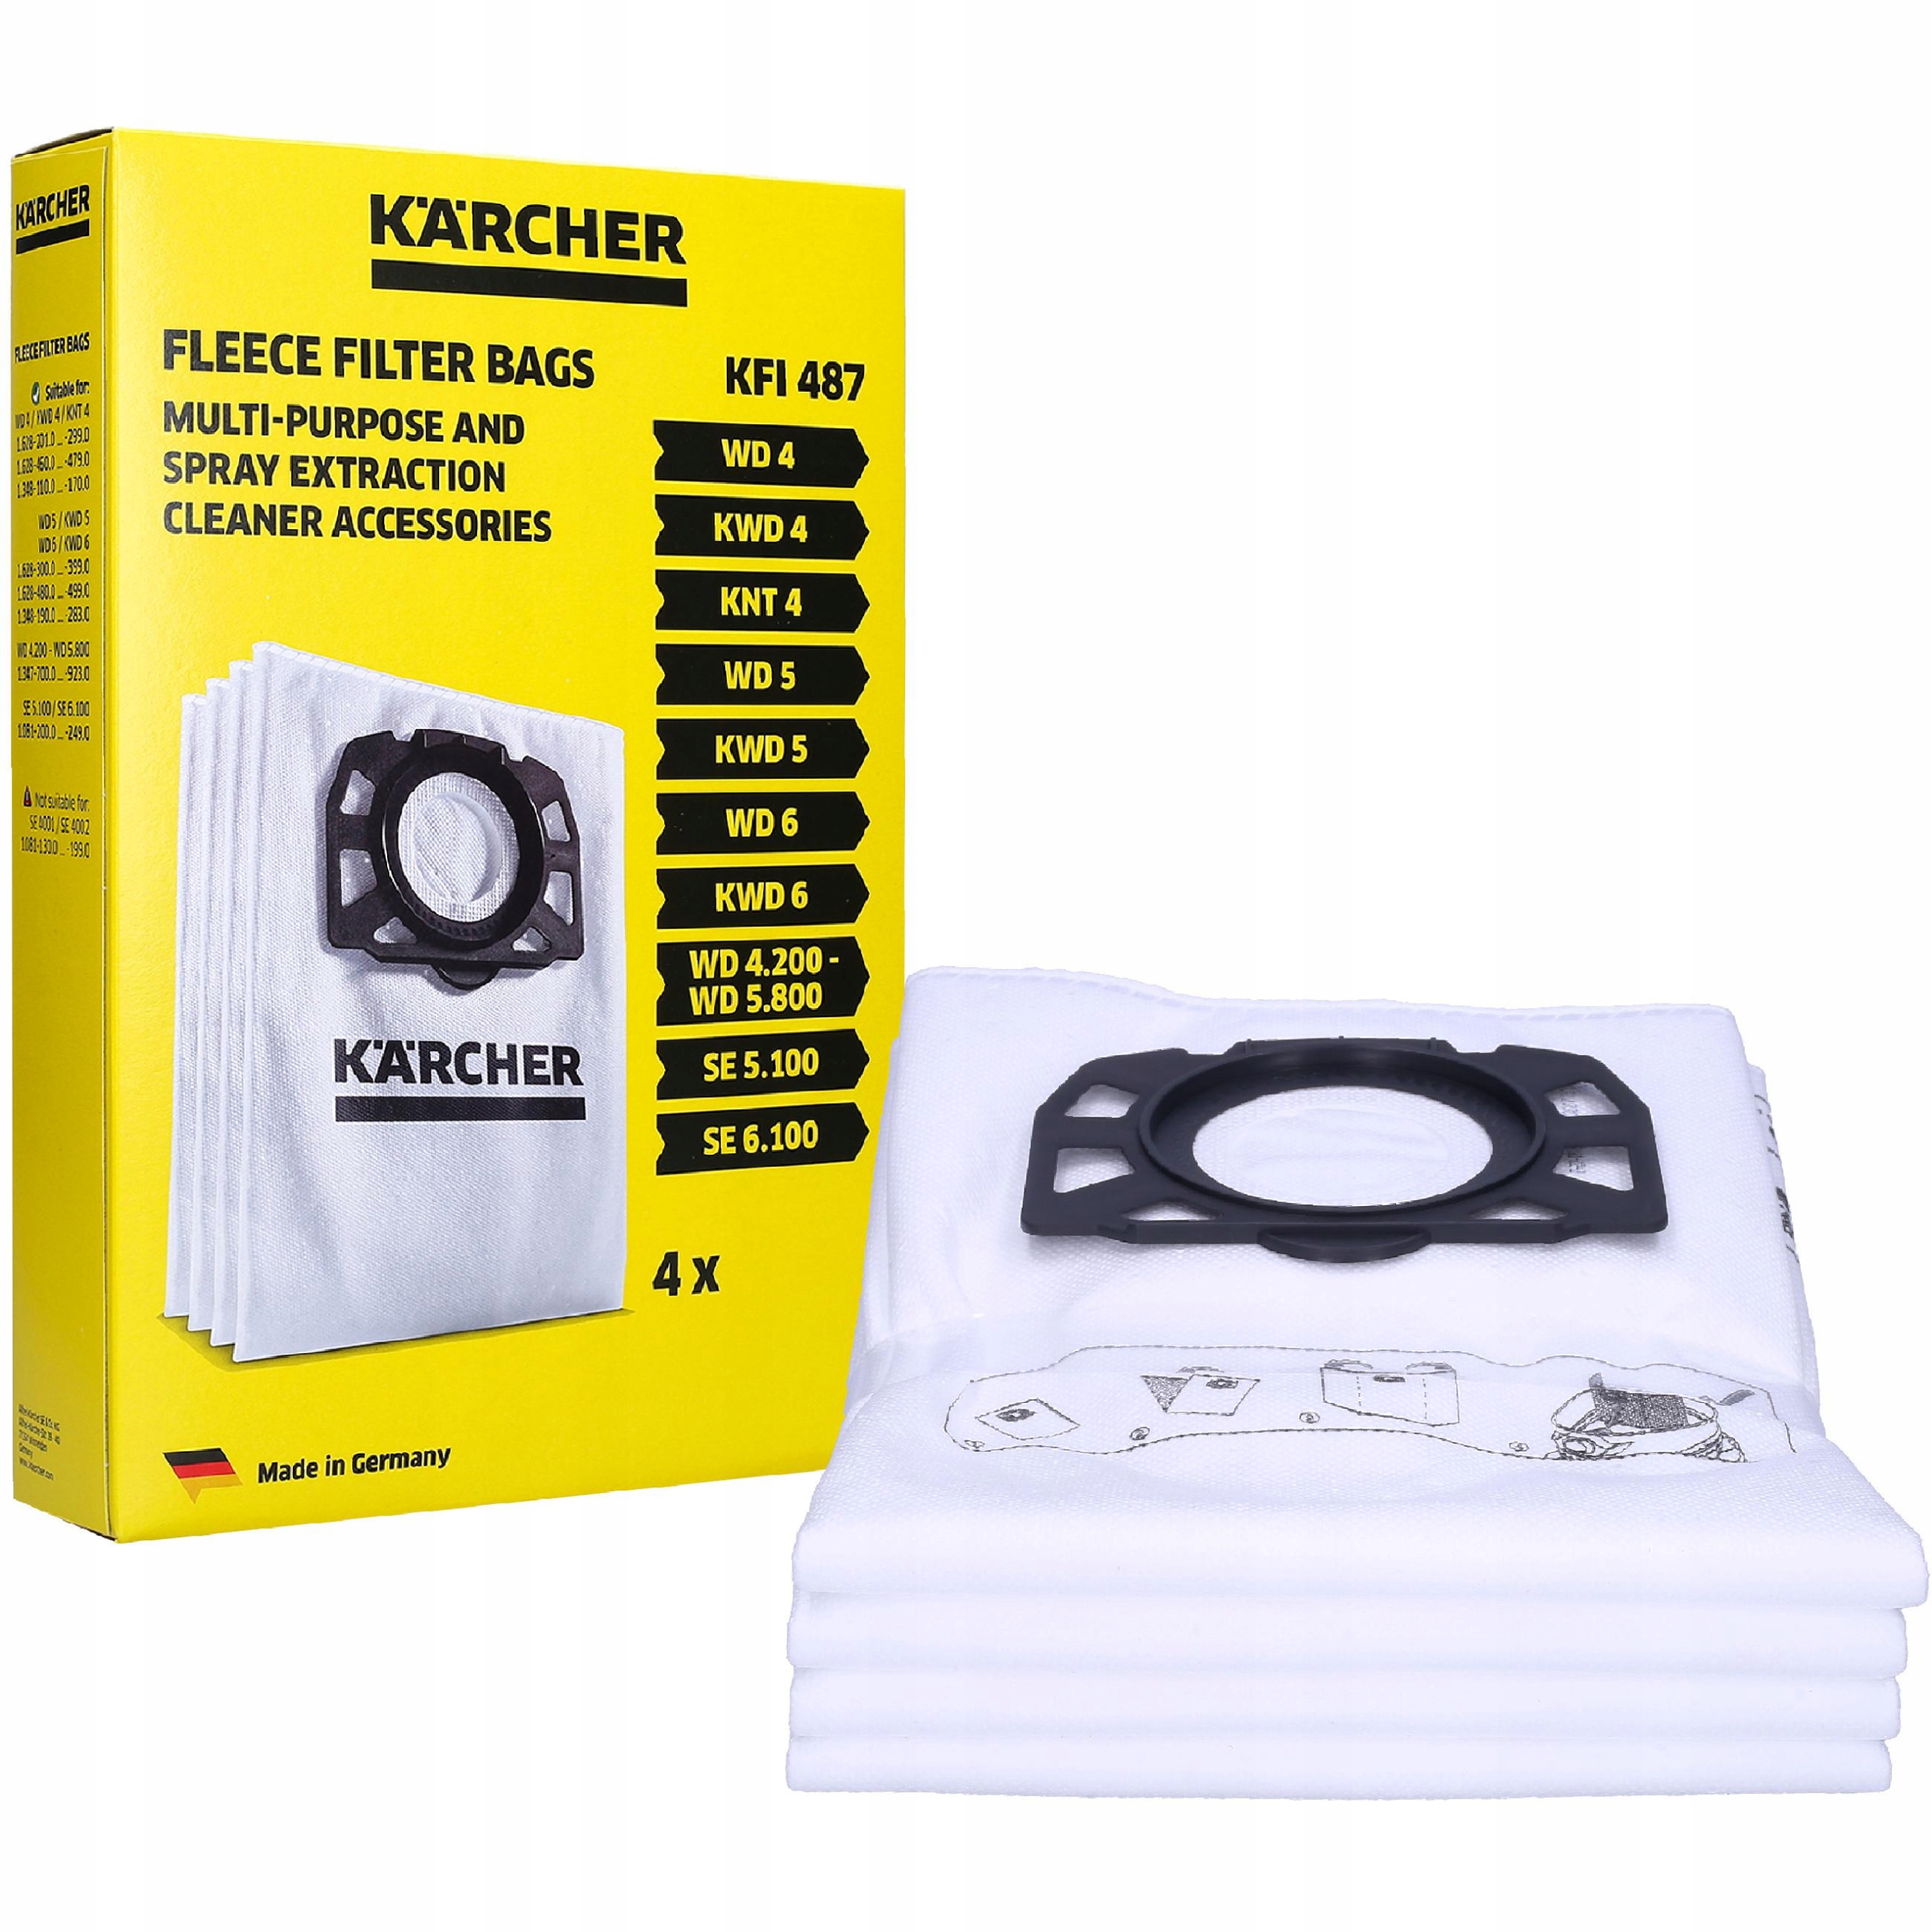 Fleece Filter Bags 4PC (KFI 487)